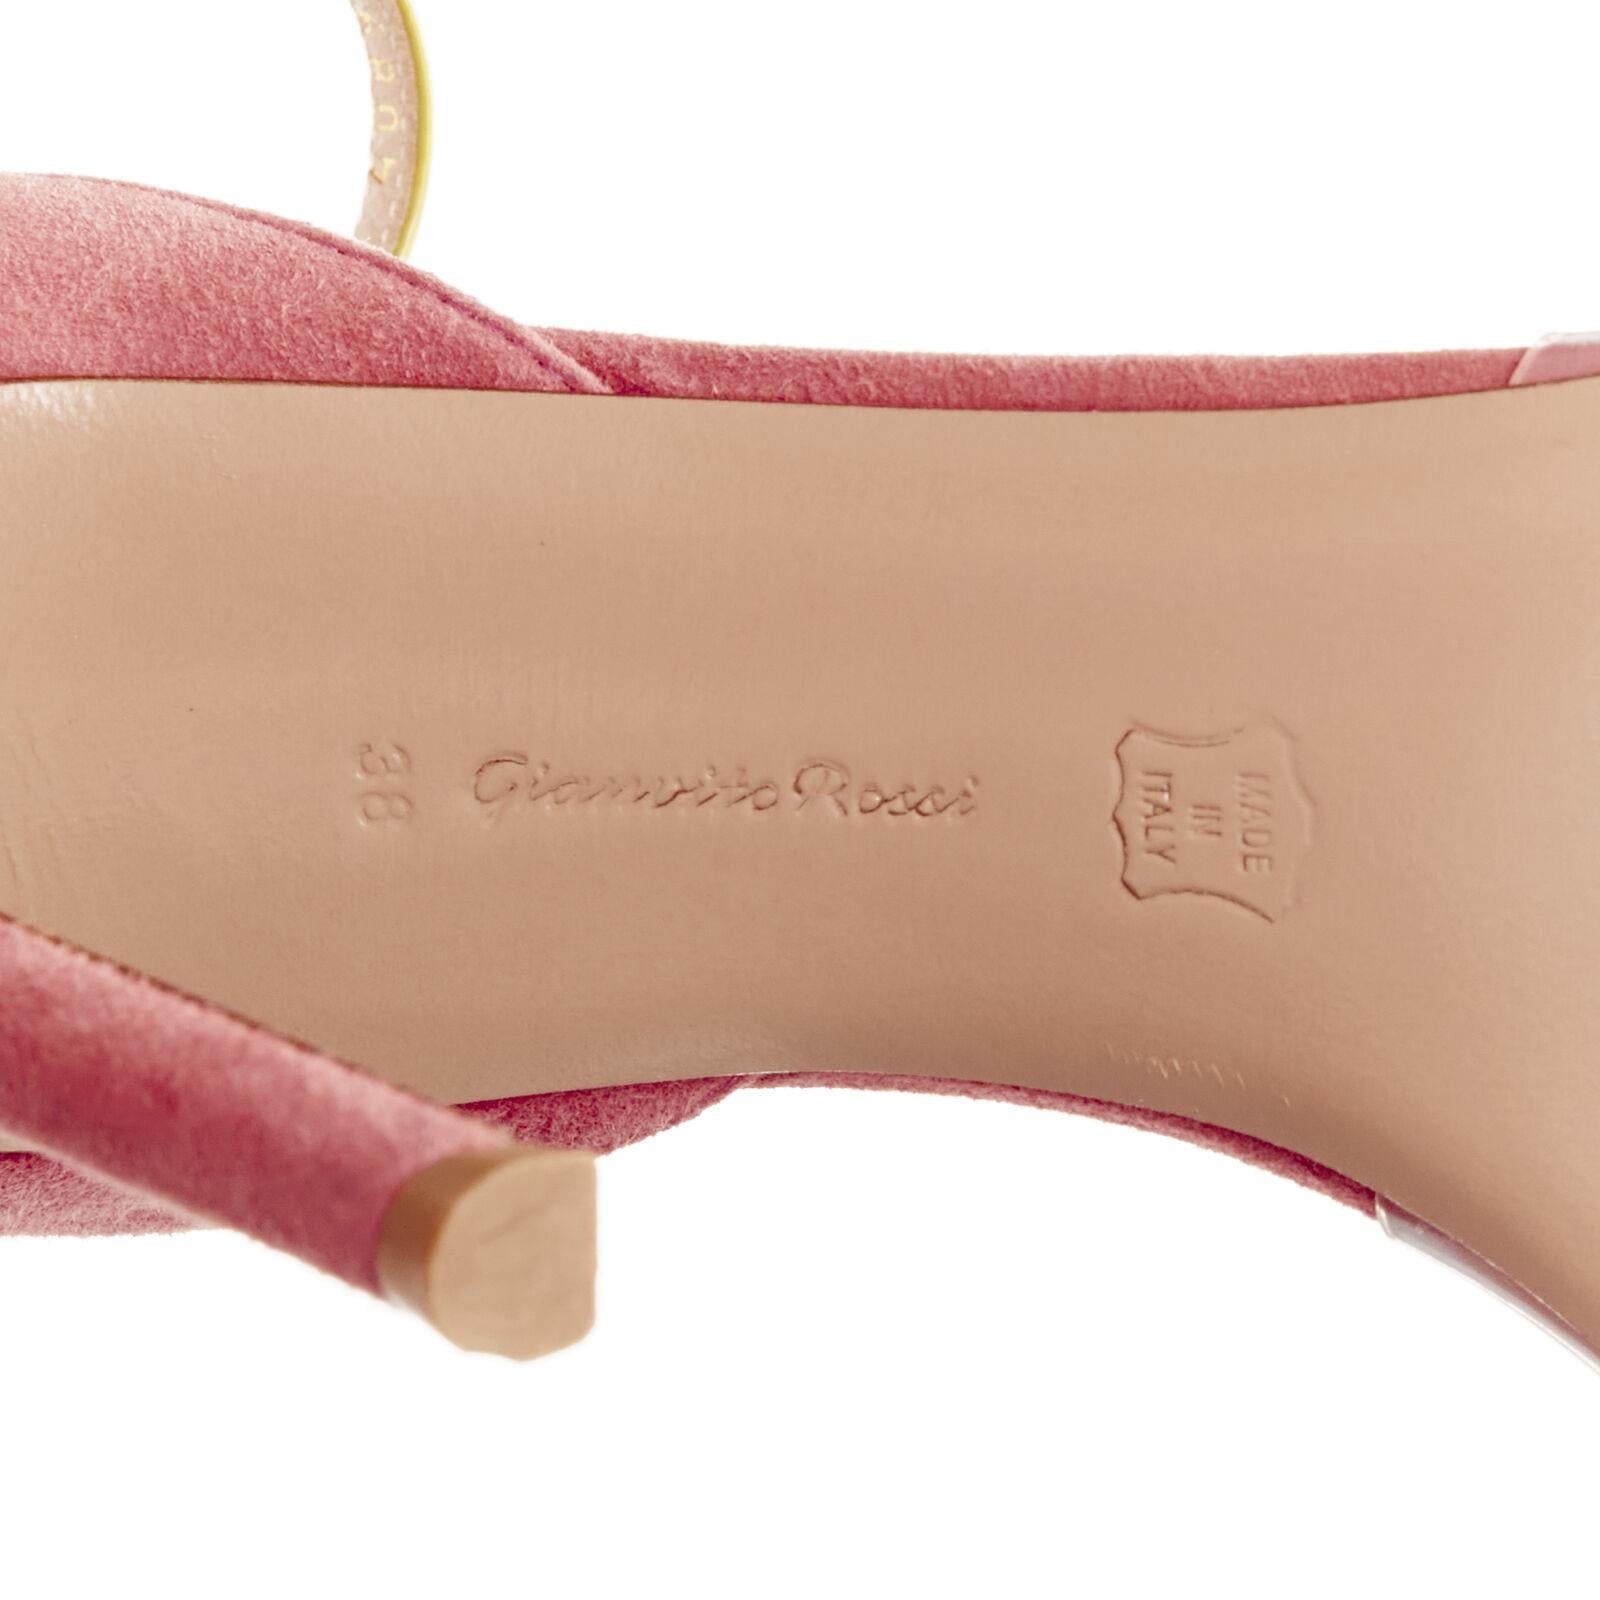 GIANVITO ROSSi Plexi purple pink suede yellow ankle strap PVC pump EU38 For Sale 5